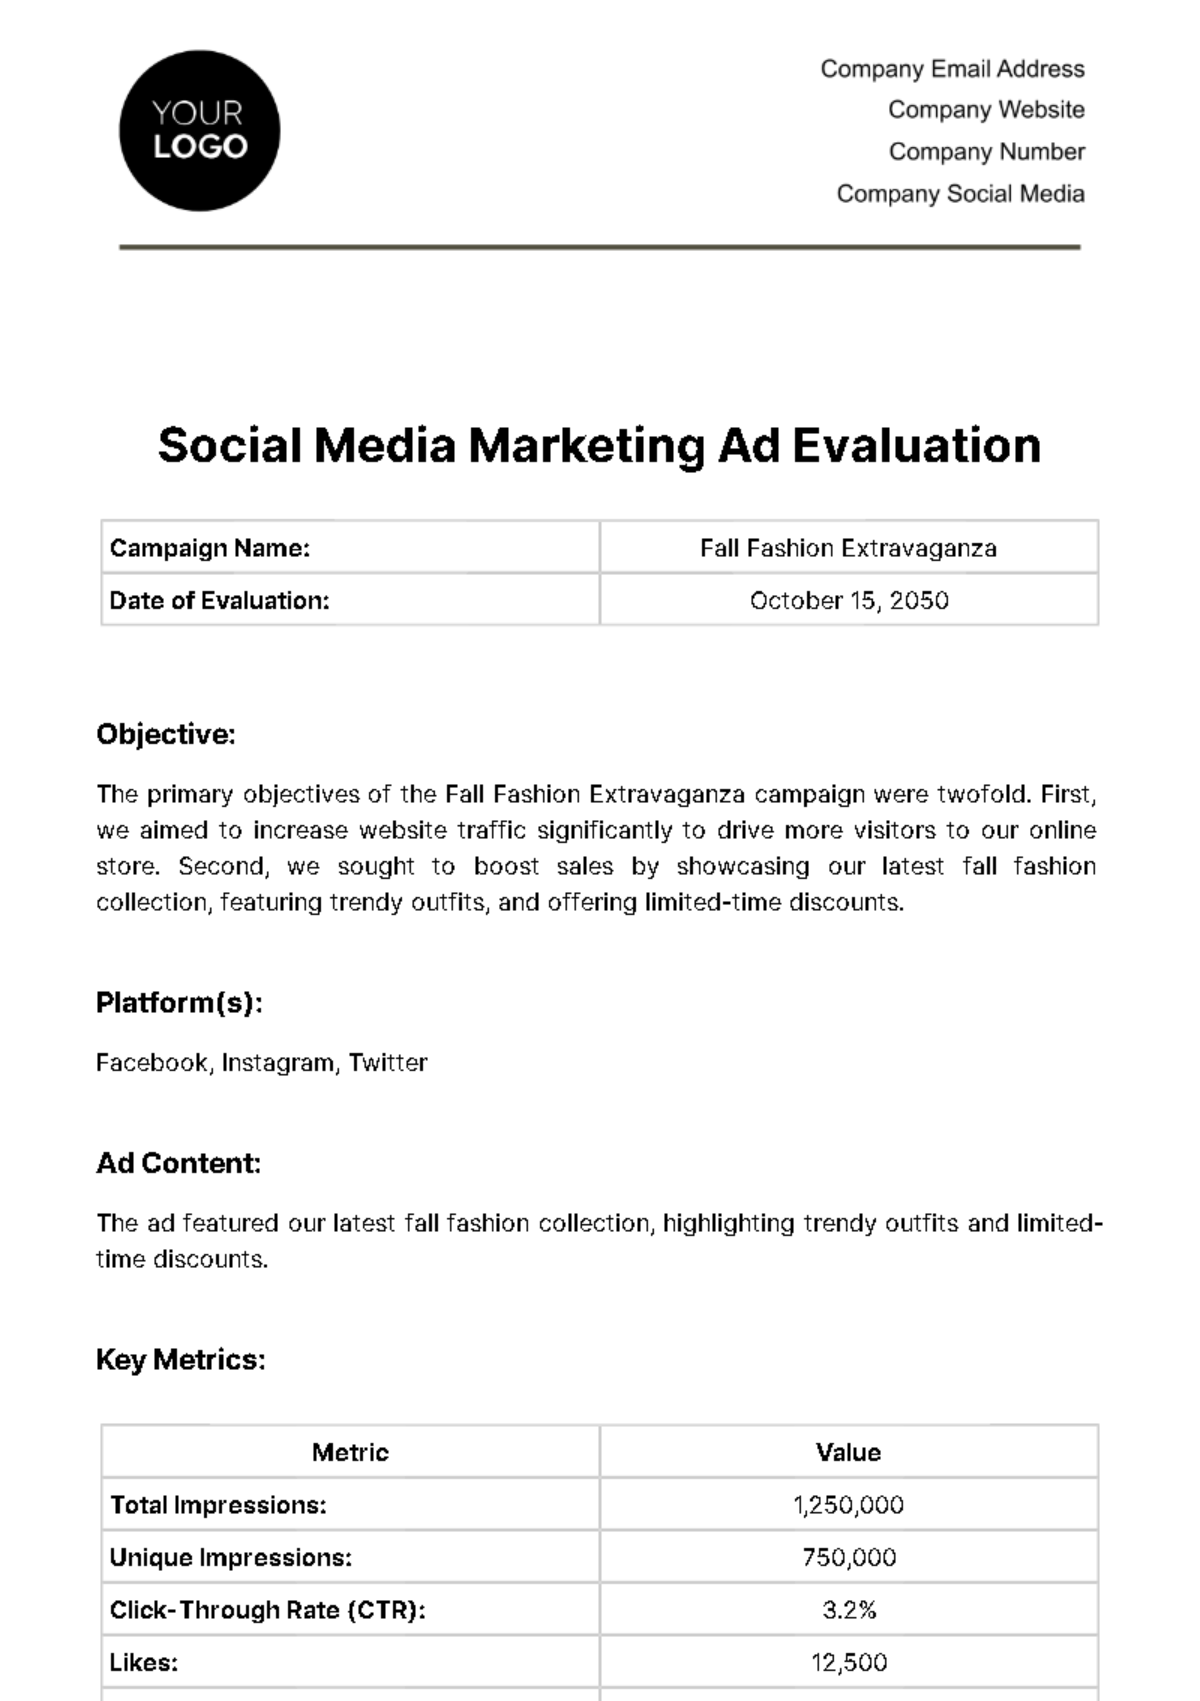 Social Media Marketing Ad Evaluation Template